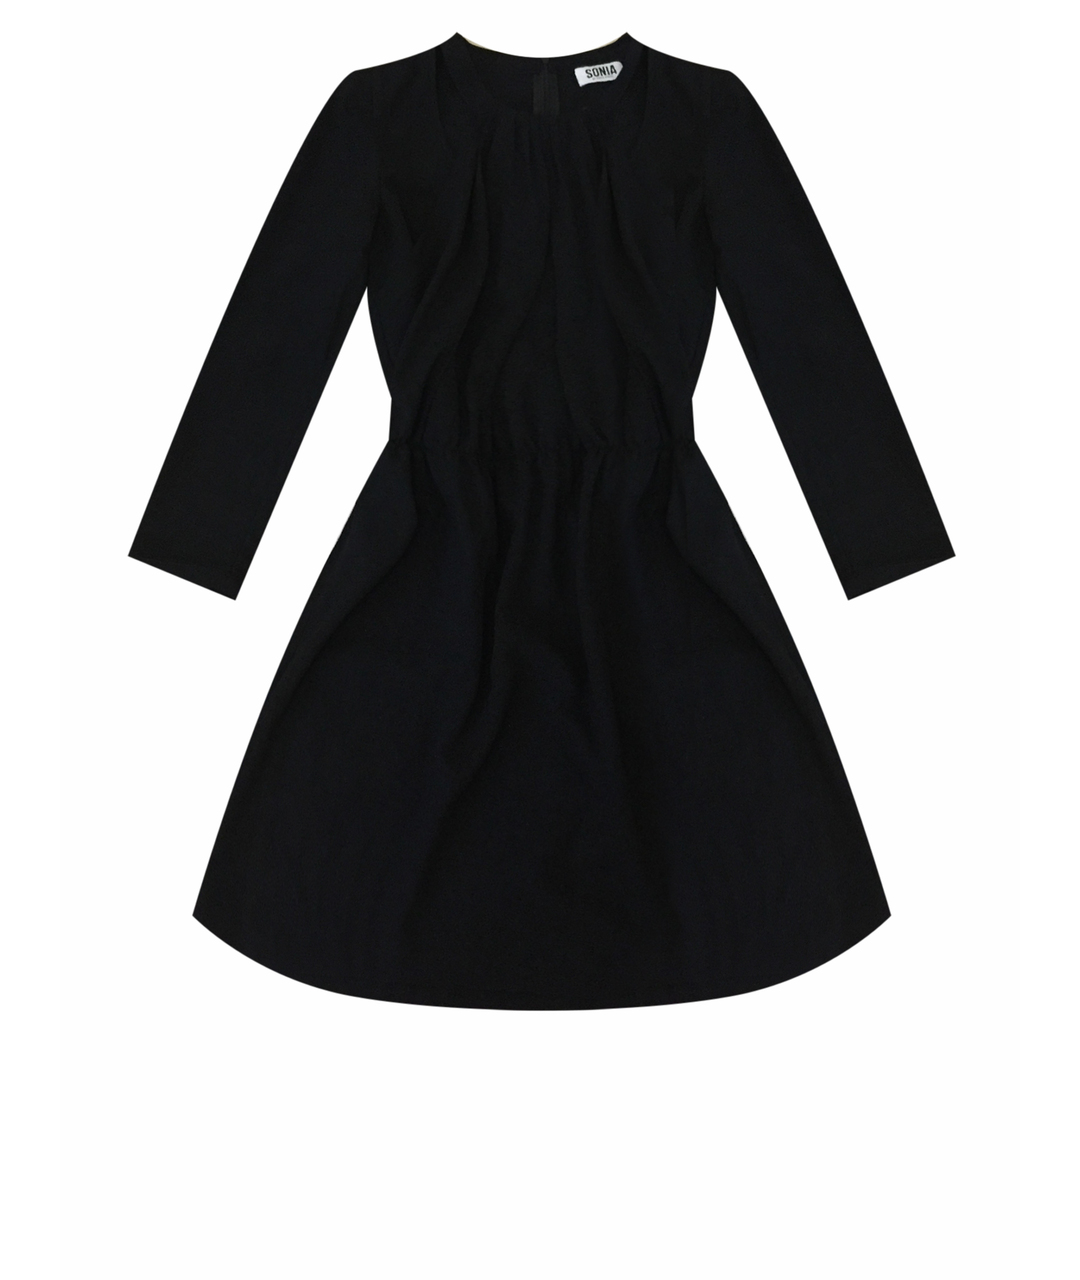 SONIA BY SONIA RYKIEL Черное полиэстеровое платье, фото 1